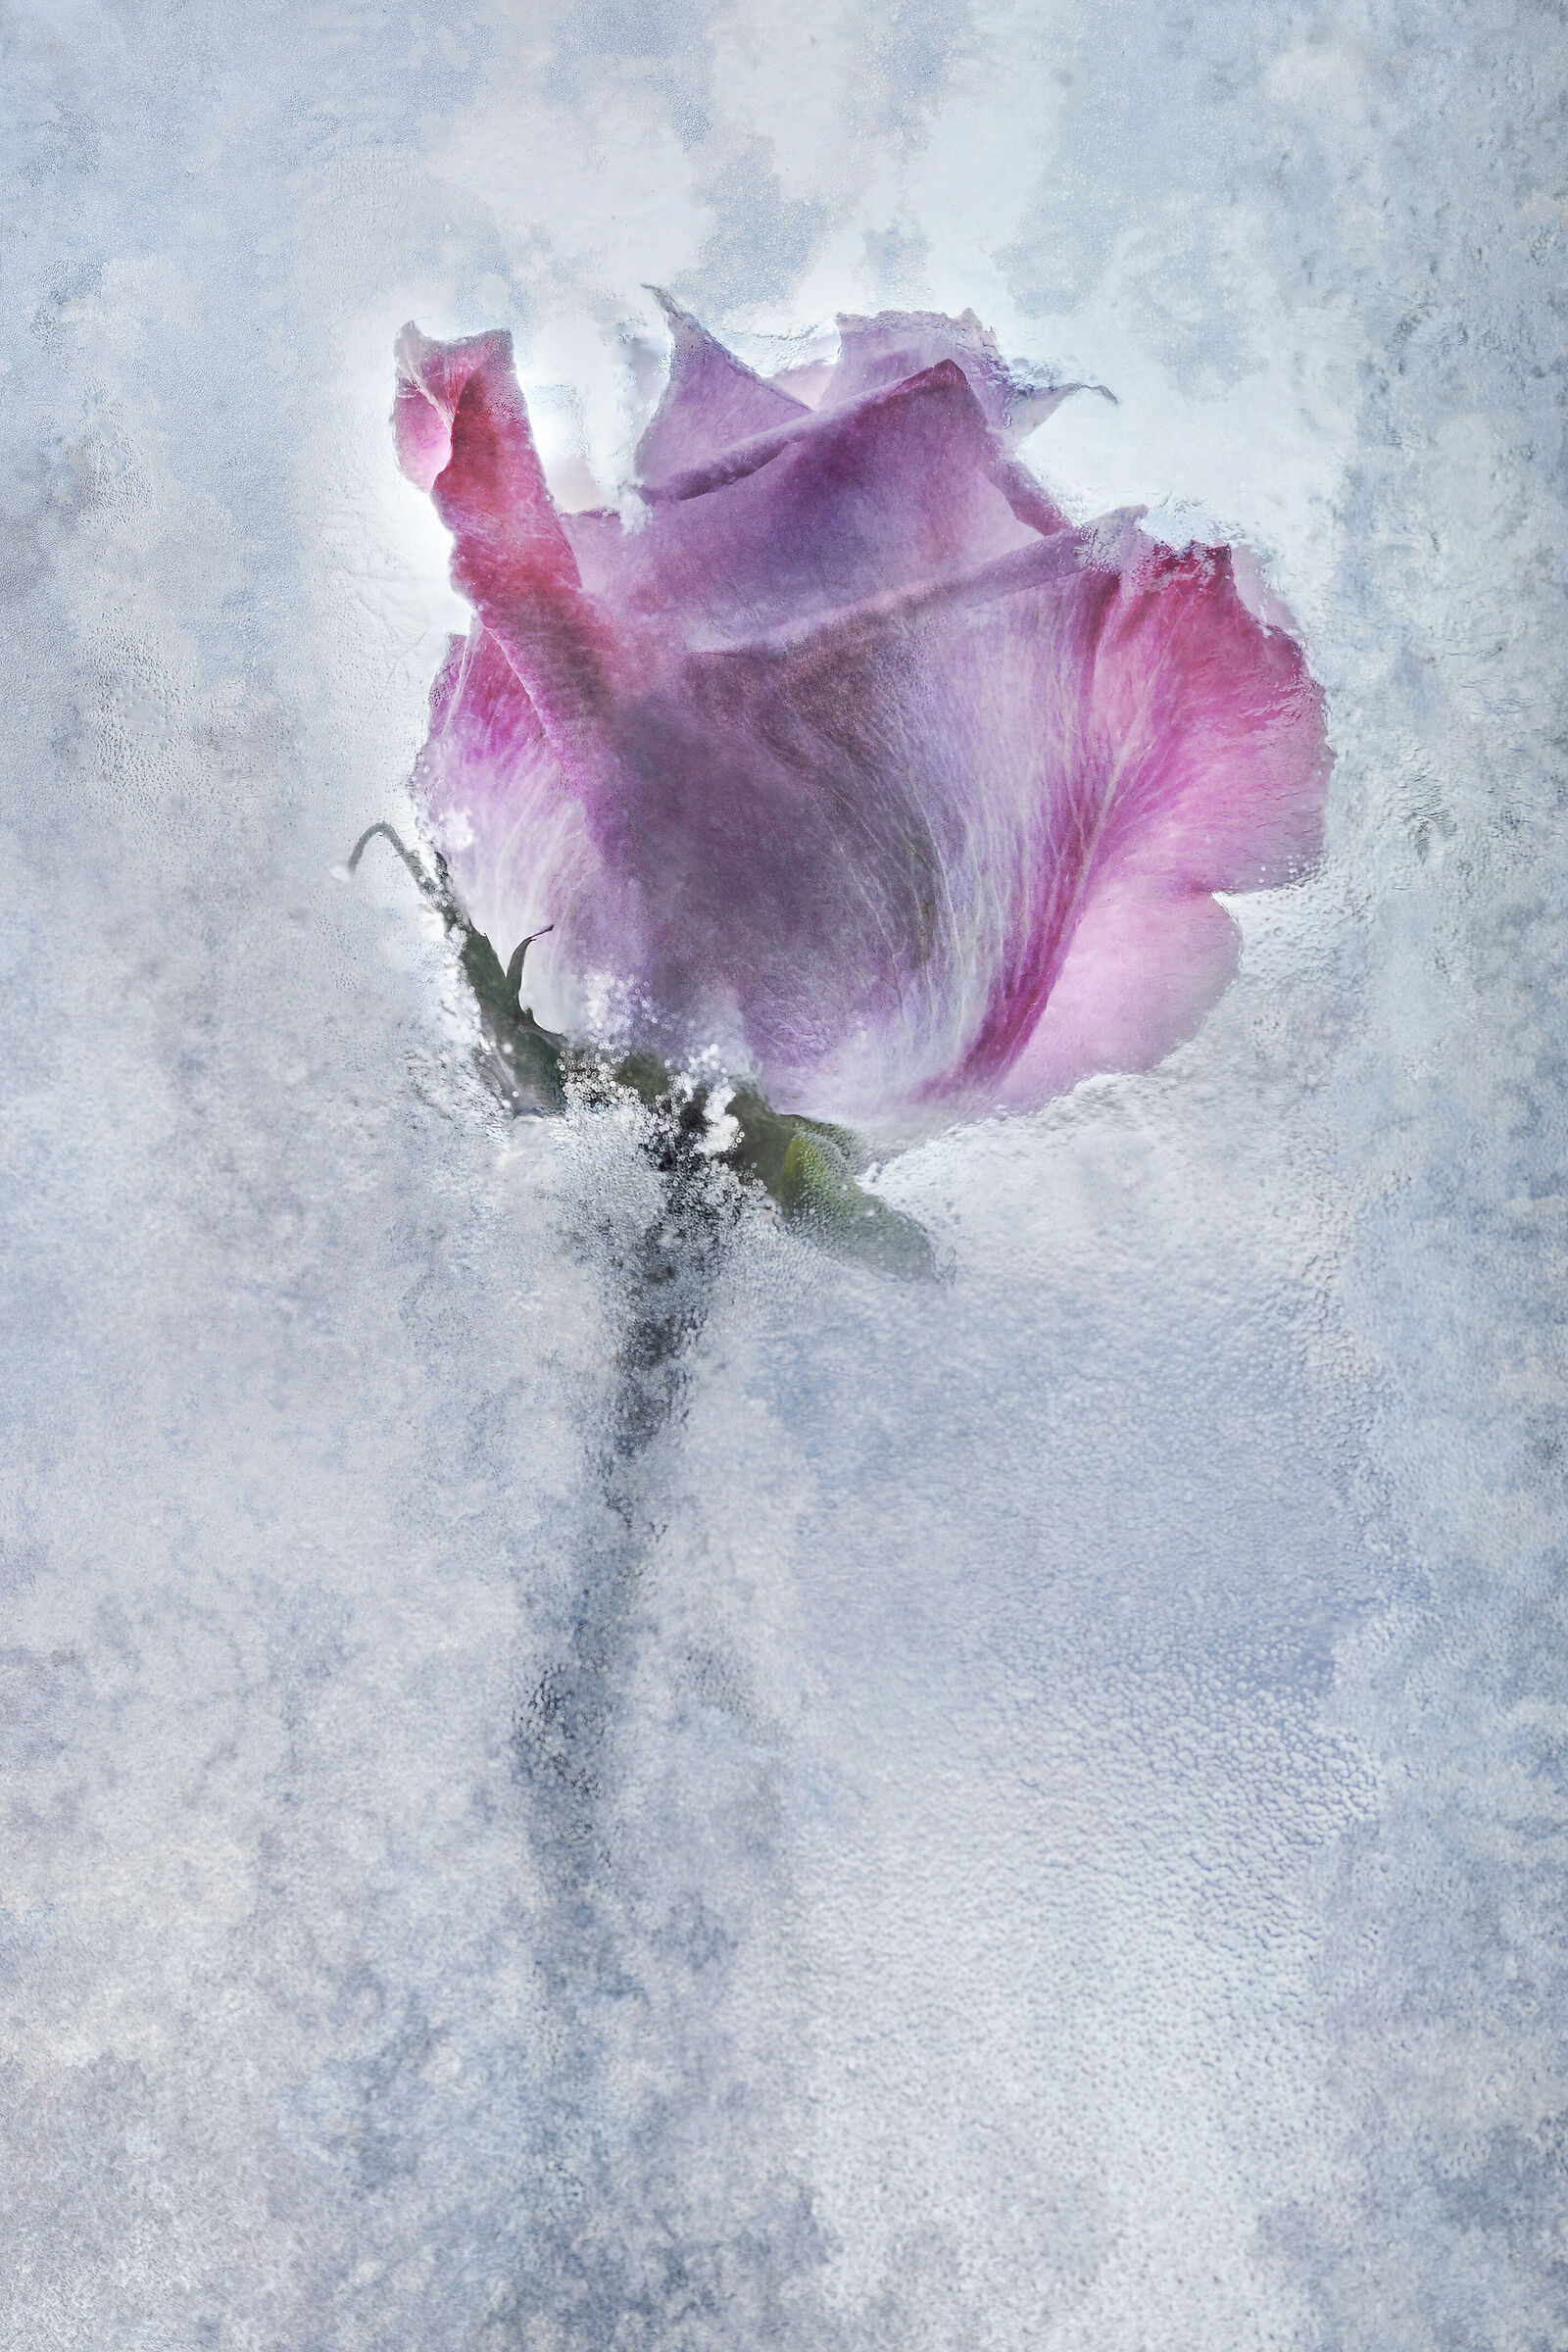 Frozen rose...